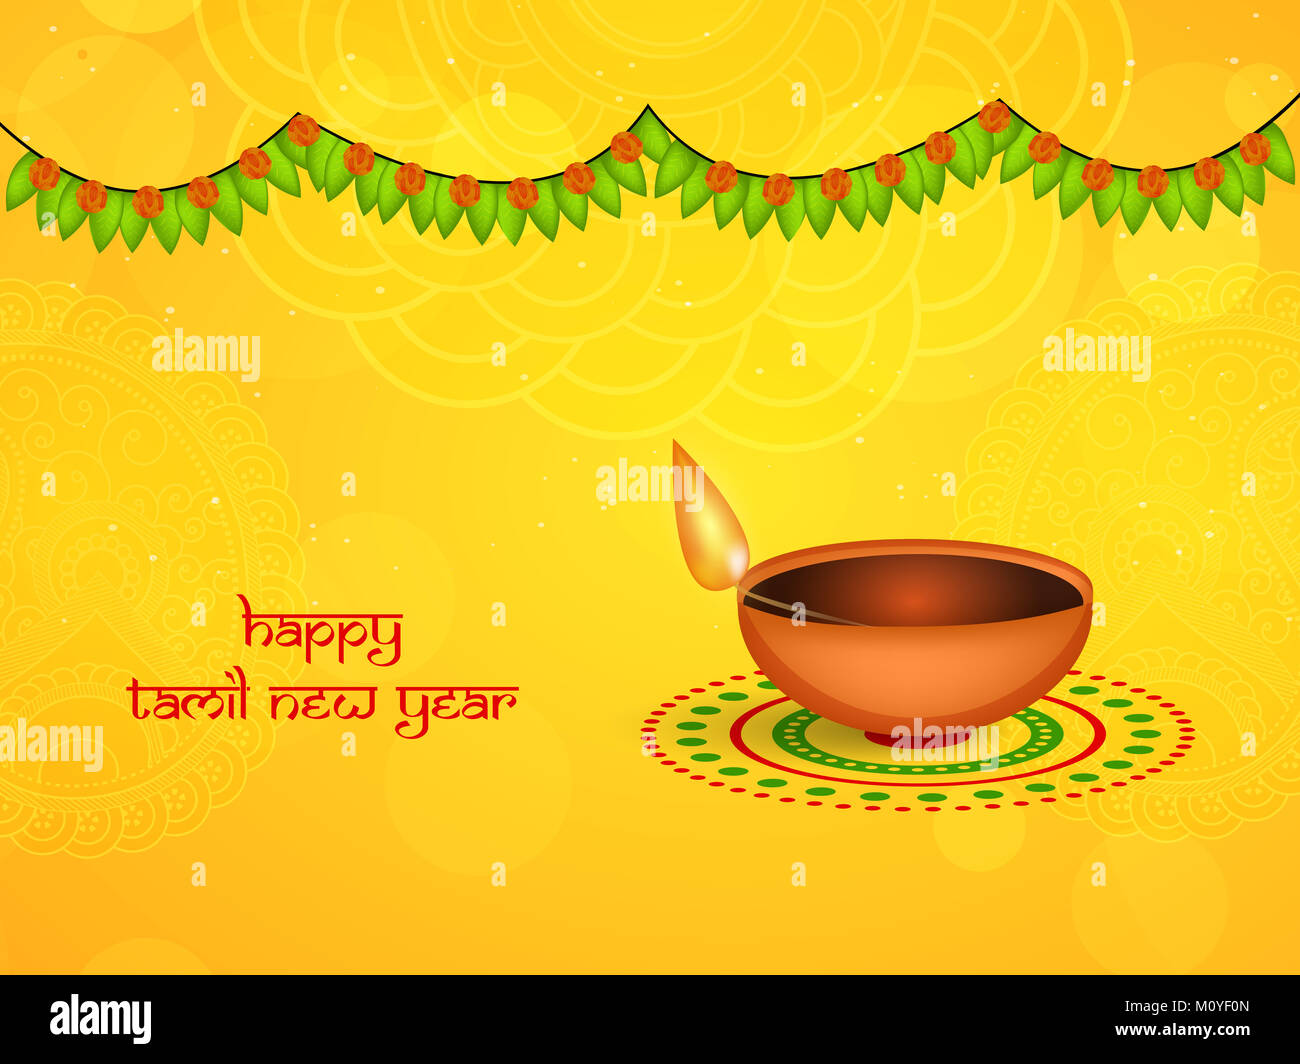 illustration of an Indian State kerala Hindu festival Vishu Background  Stock Photo - Alamy